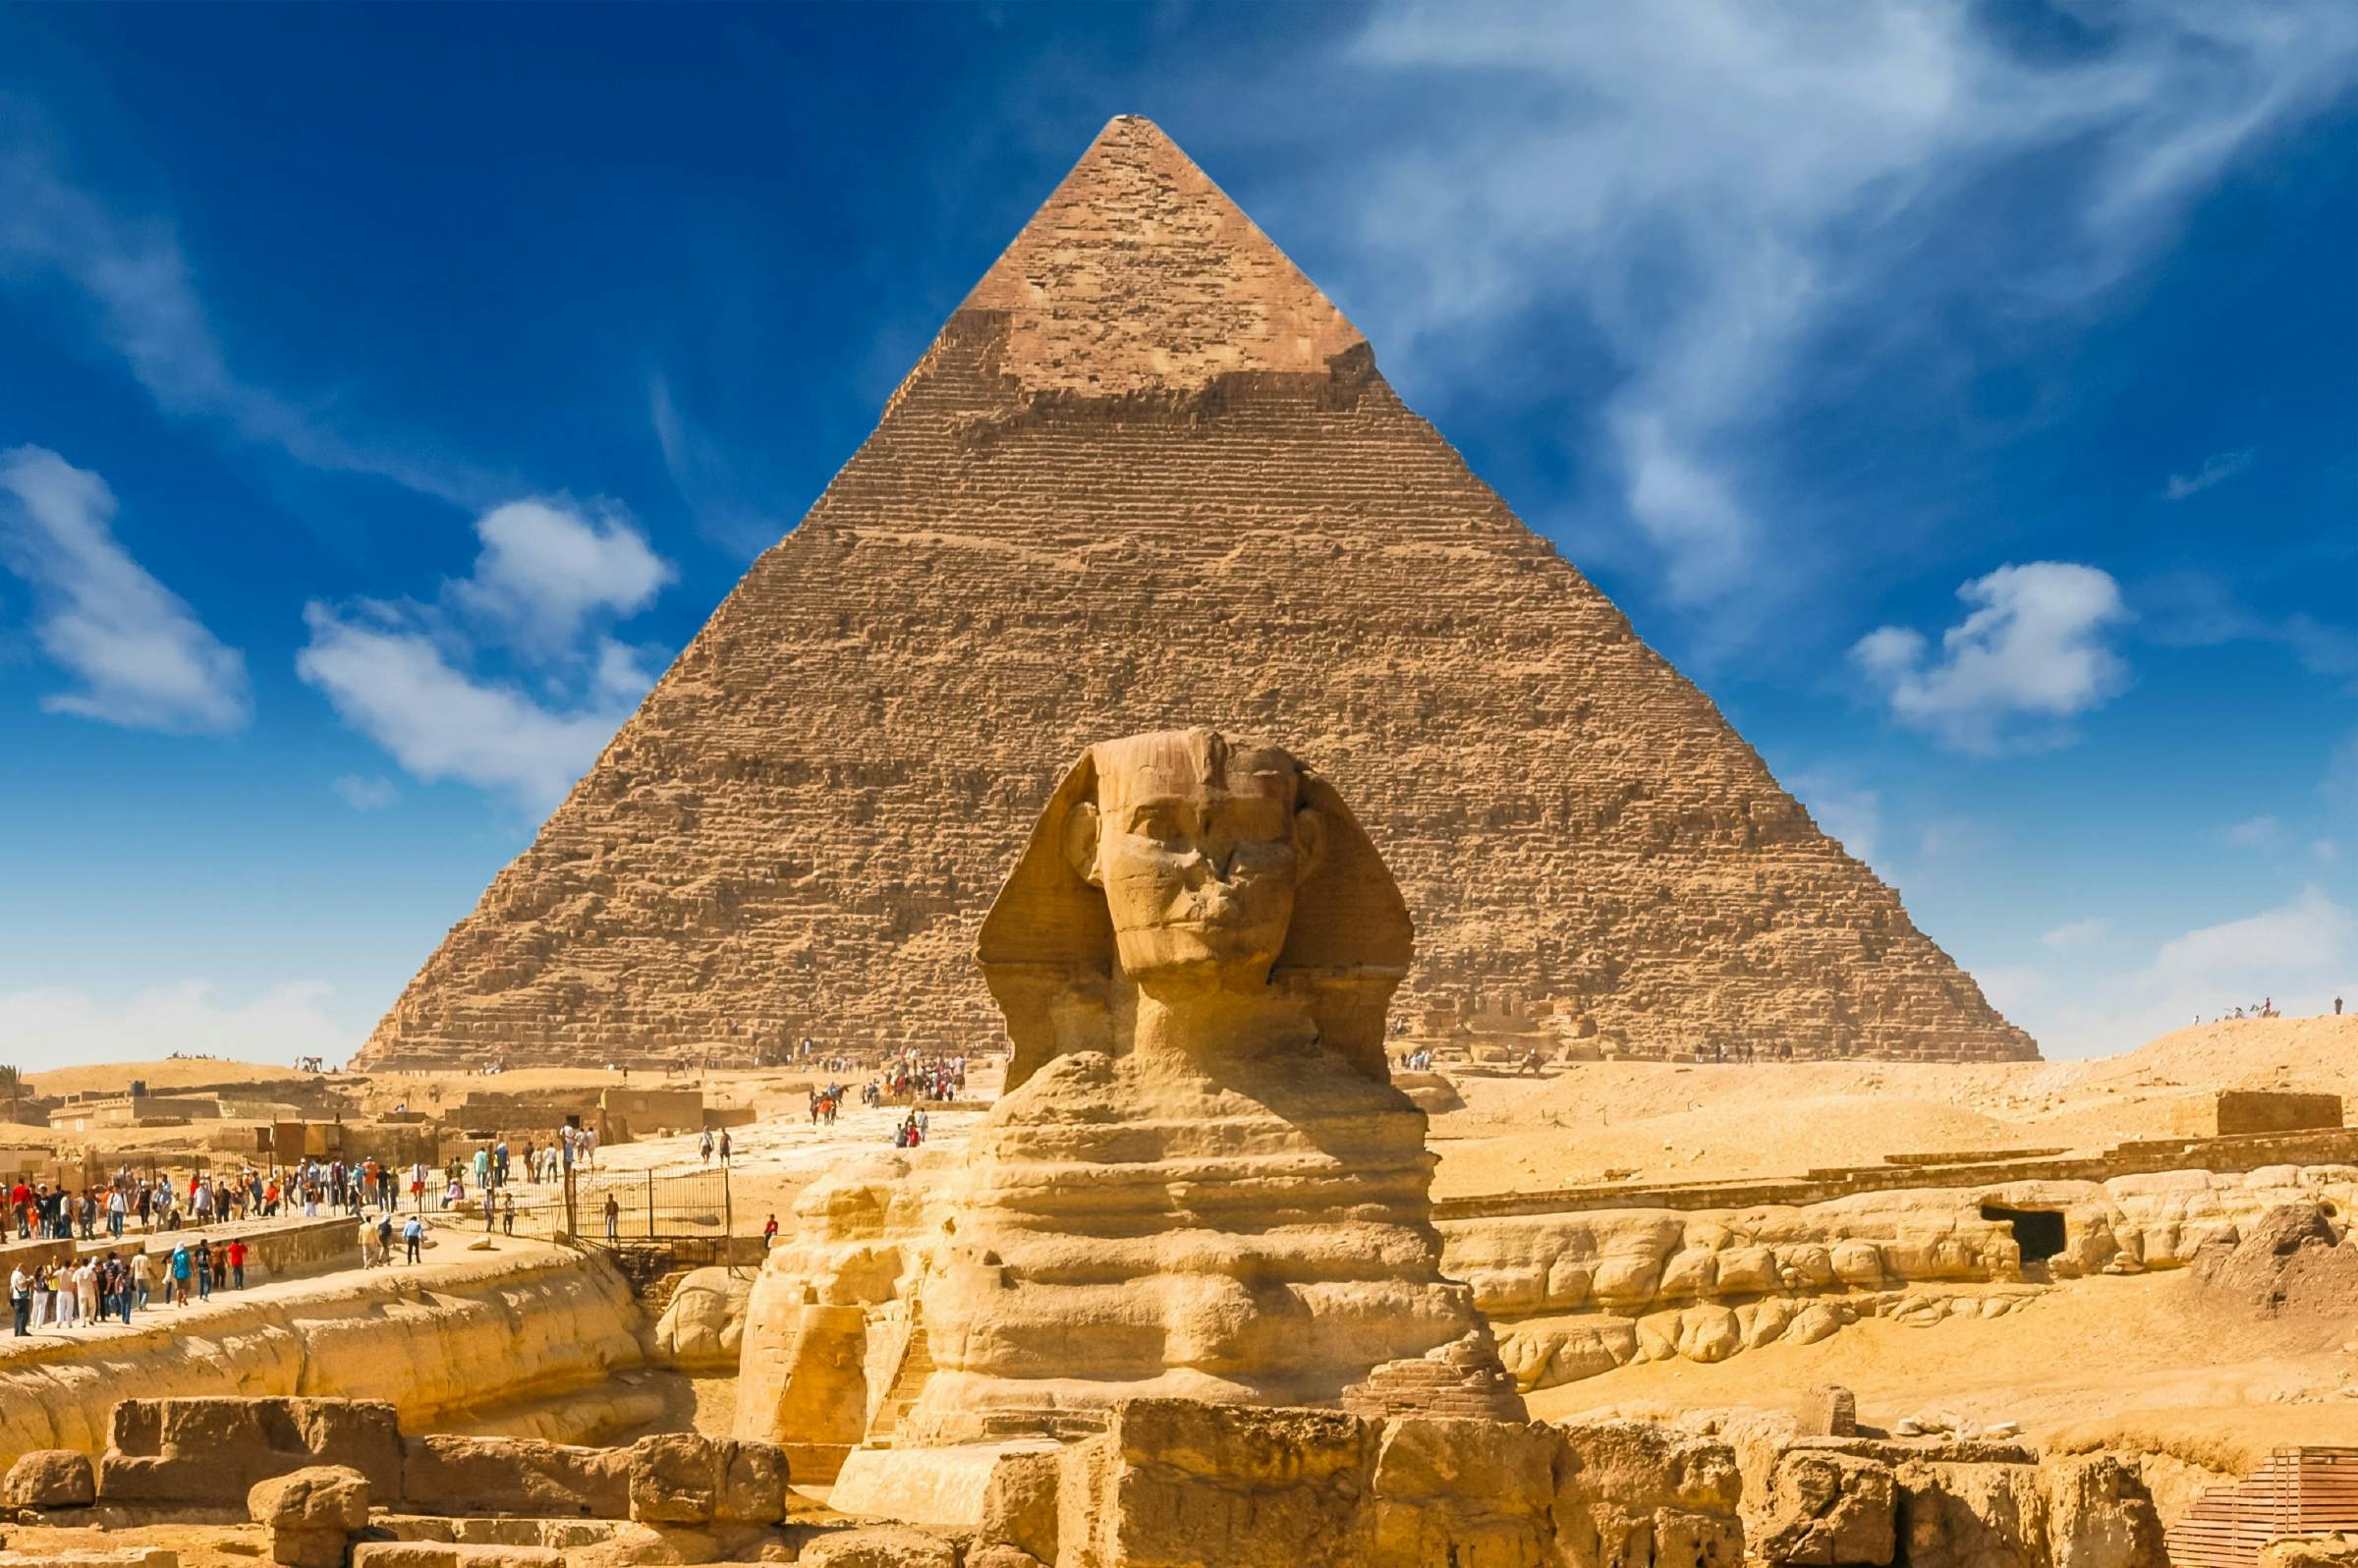 New international airport opens near Egypt's Pyramids of Giza